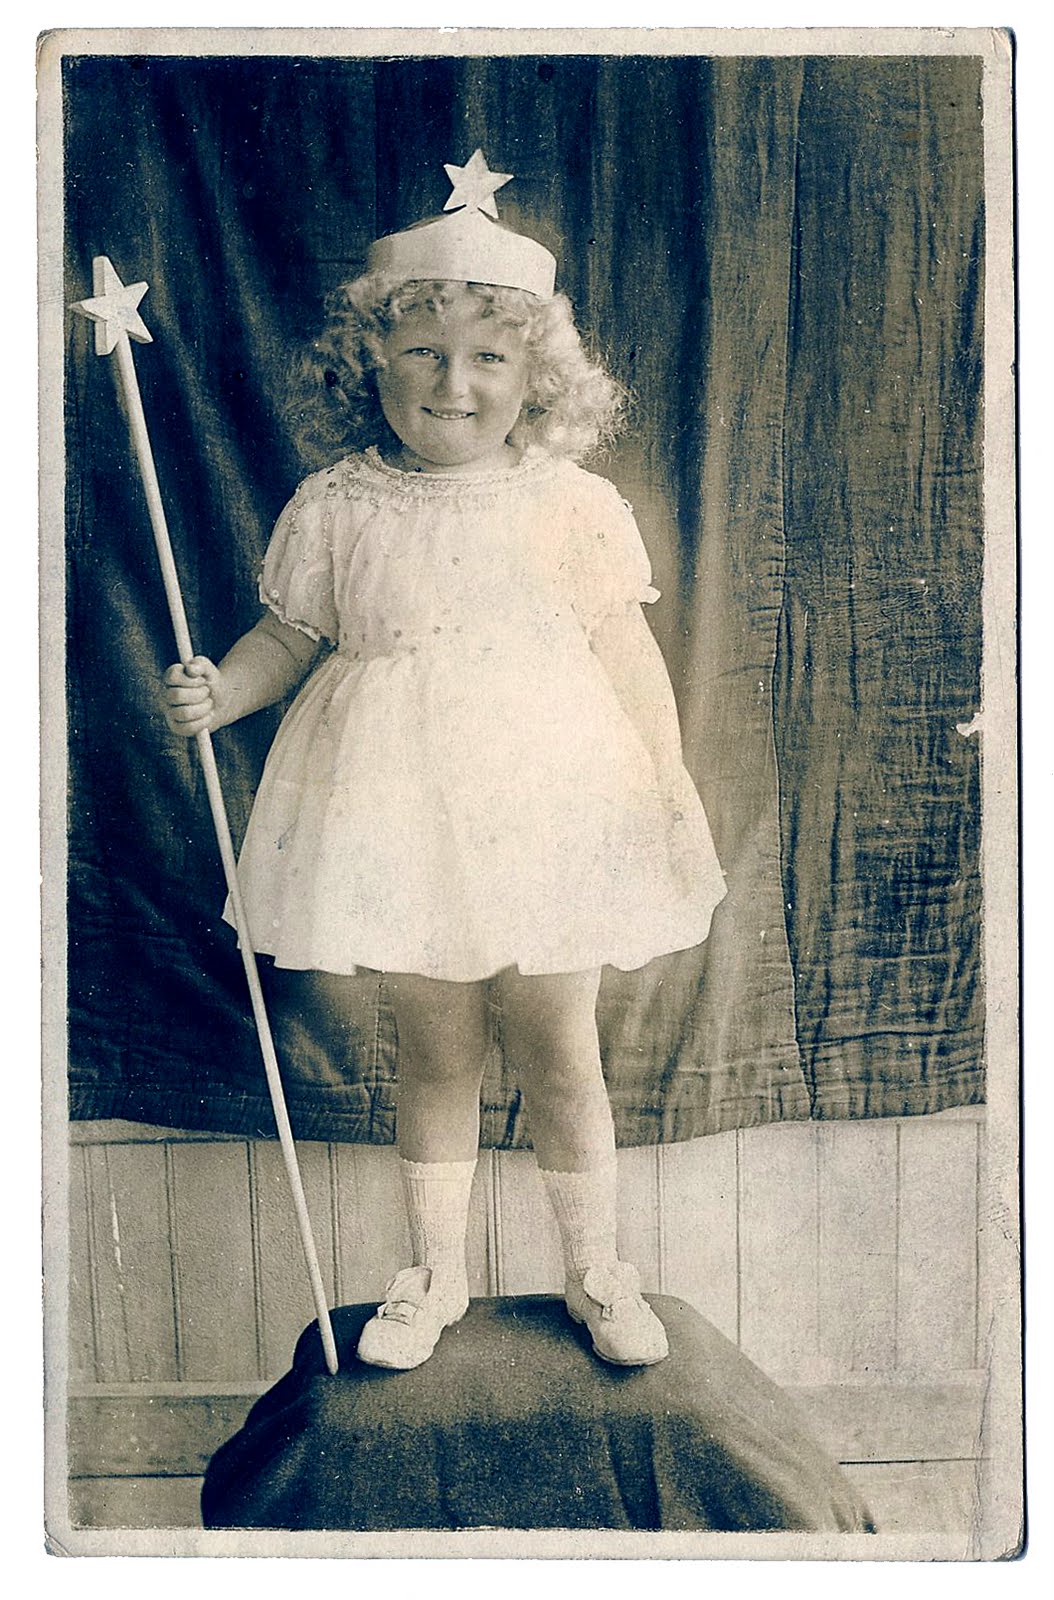 Old Photo - Cutest Fairy Princess Ever! - The Graphics Fairy1054 x 1600